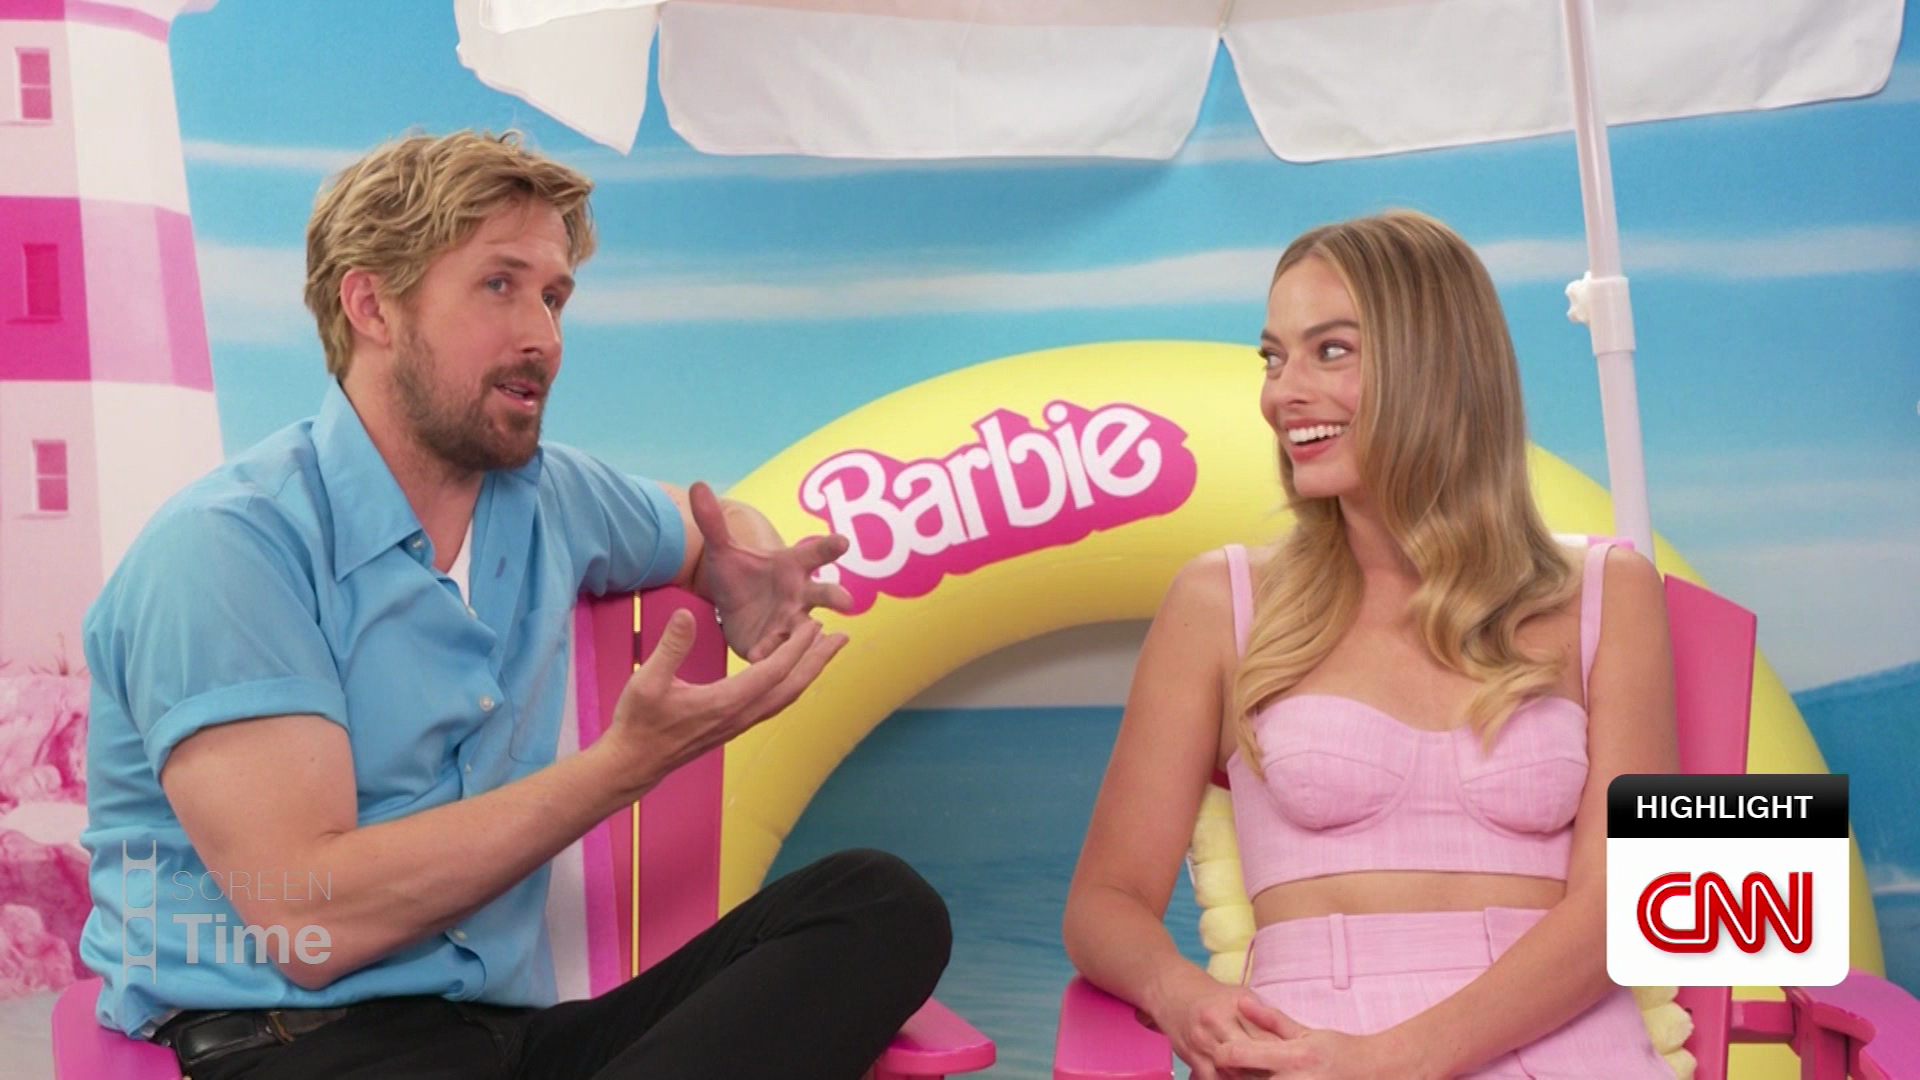 Ryan Gosling Responds to Ken, 'Barbie' Movie Criticism